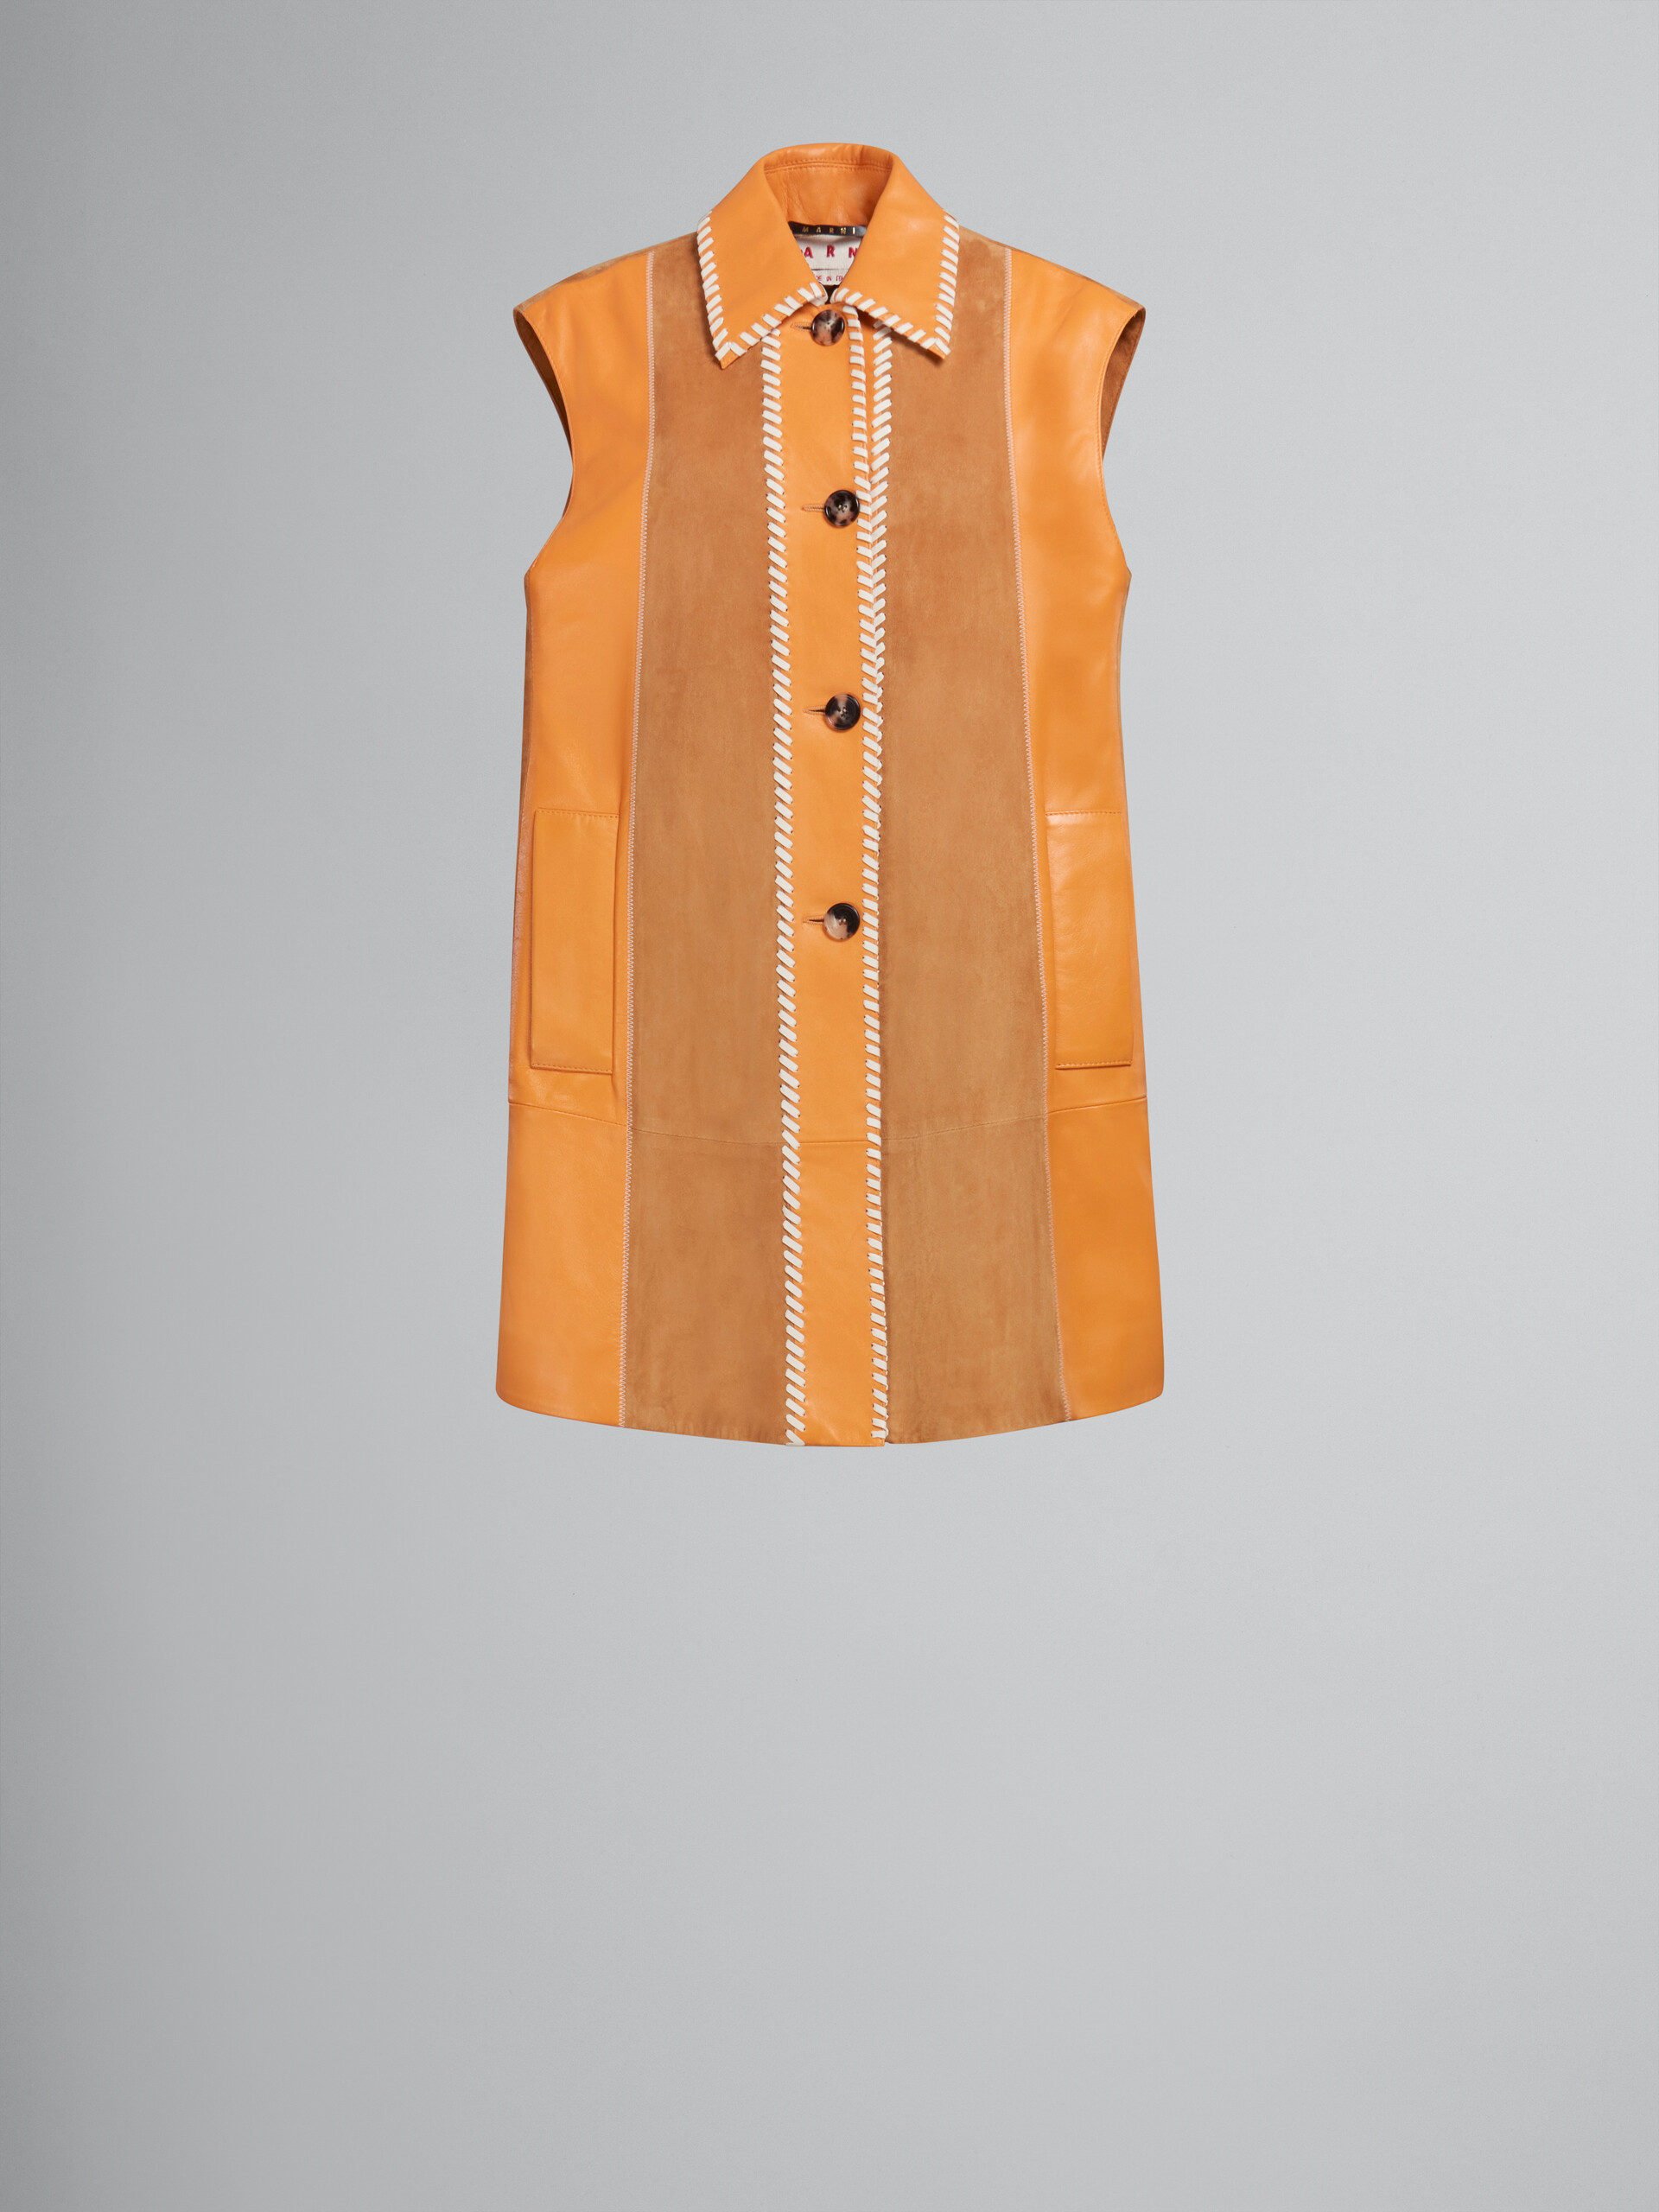 Robe patchwork en cuir nappa et daim orange - Gilet - Image 1